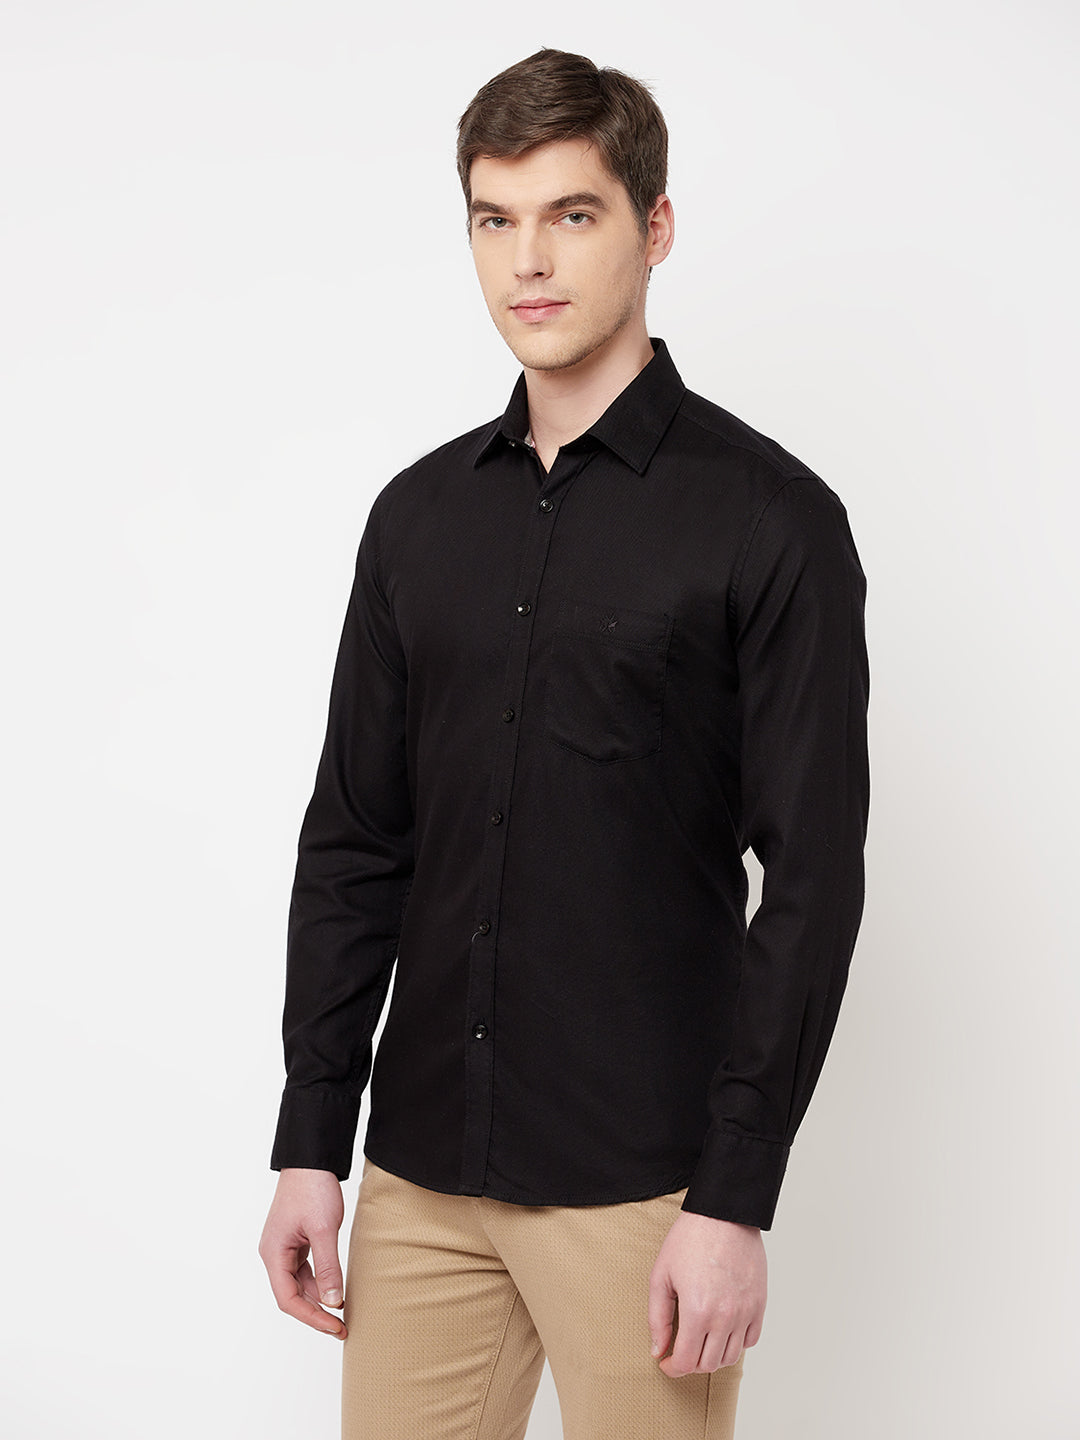 Black Casual Shirt - Men Shirts